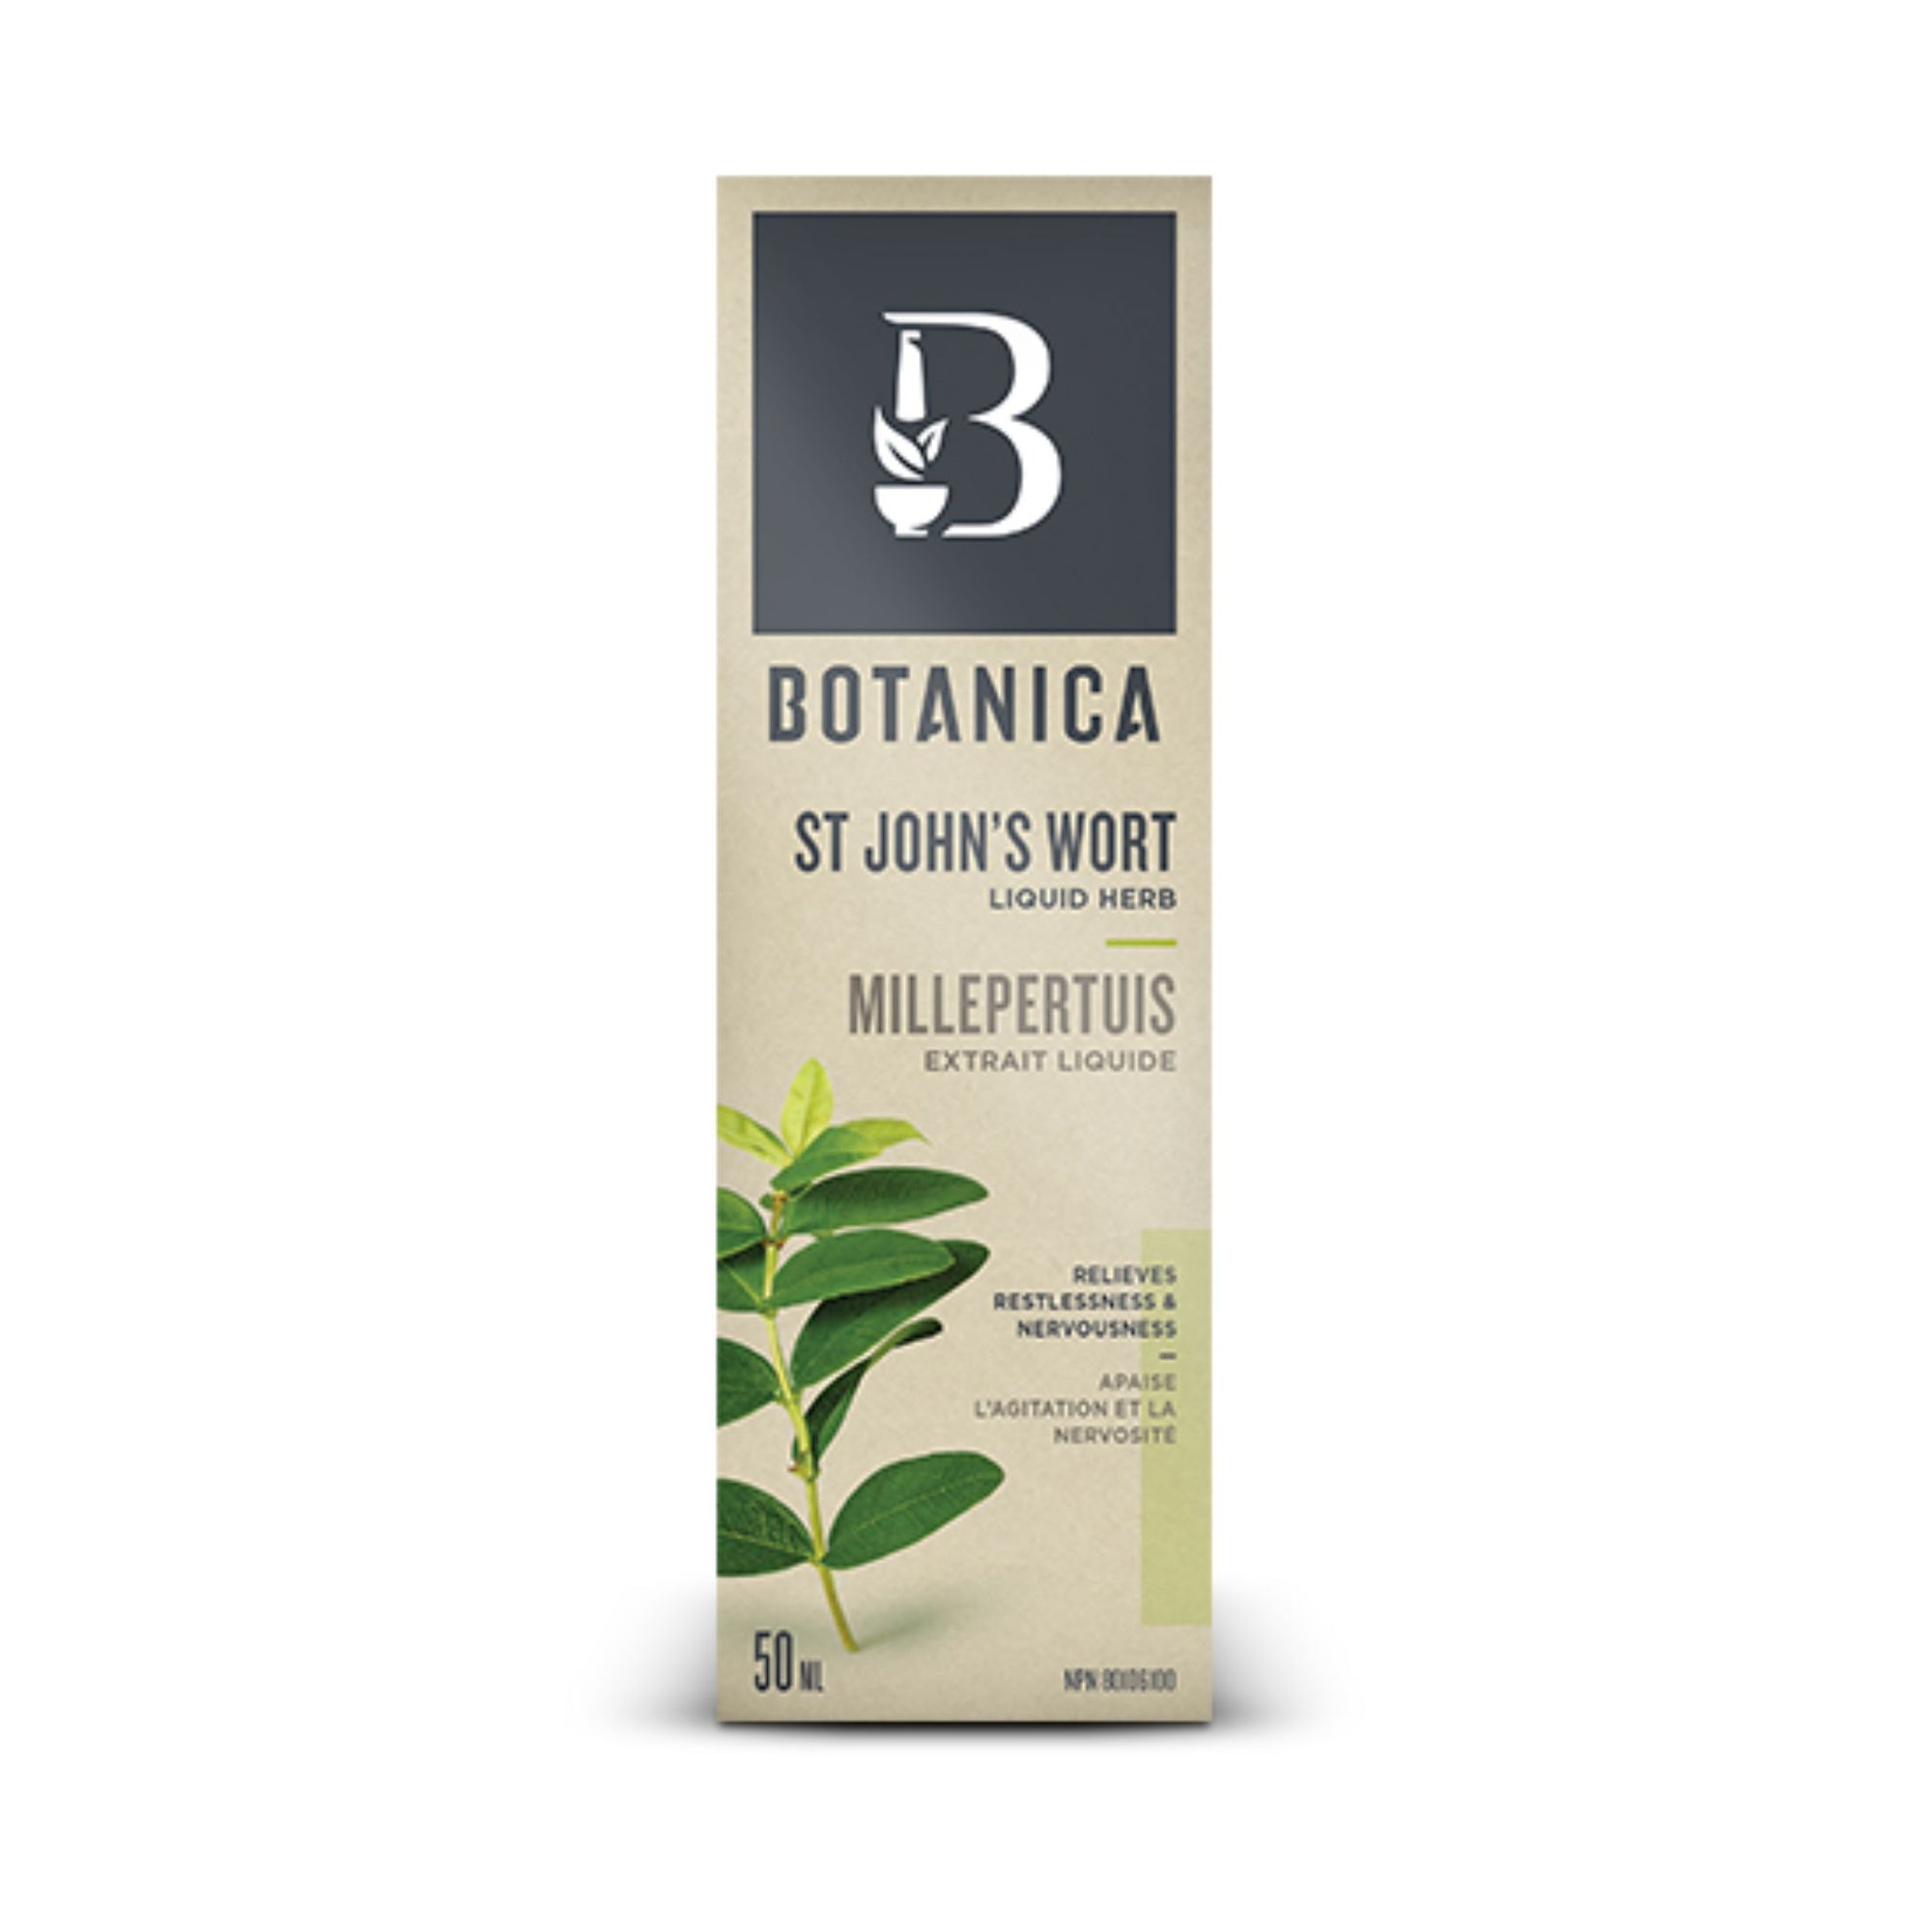 Bottle of Botanica's St John's Wort Liquid Herbal Supplement 50mL - Relieves restlessness and nervousness. 